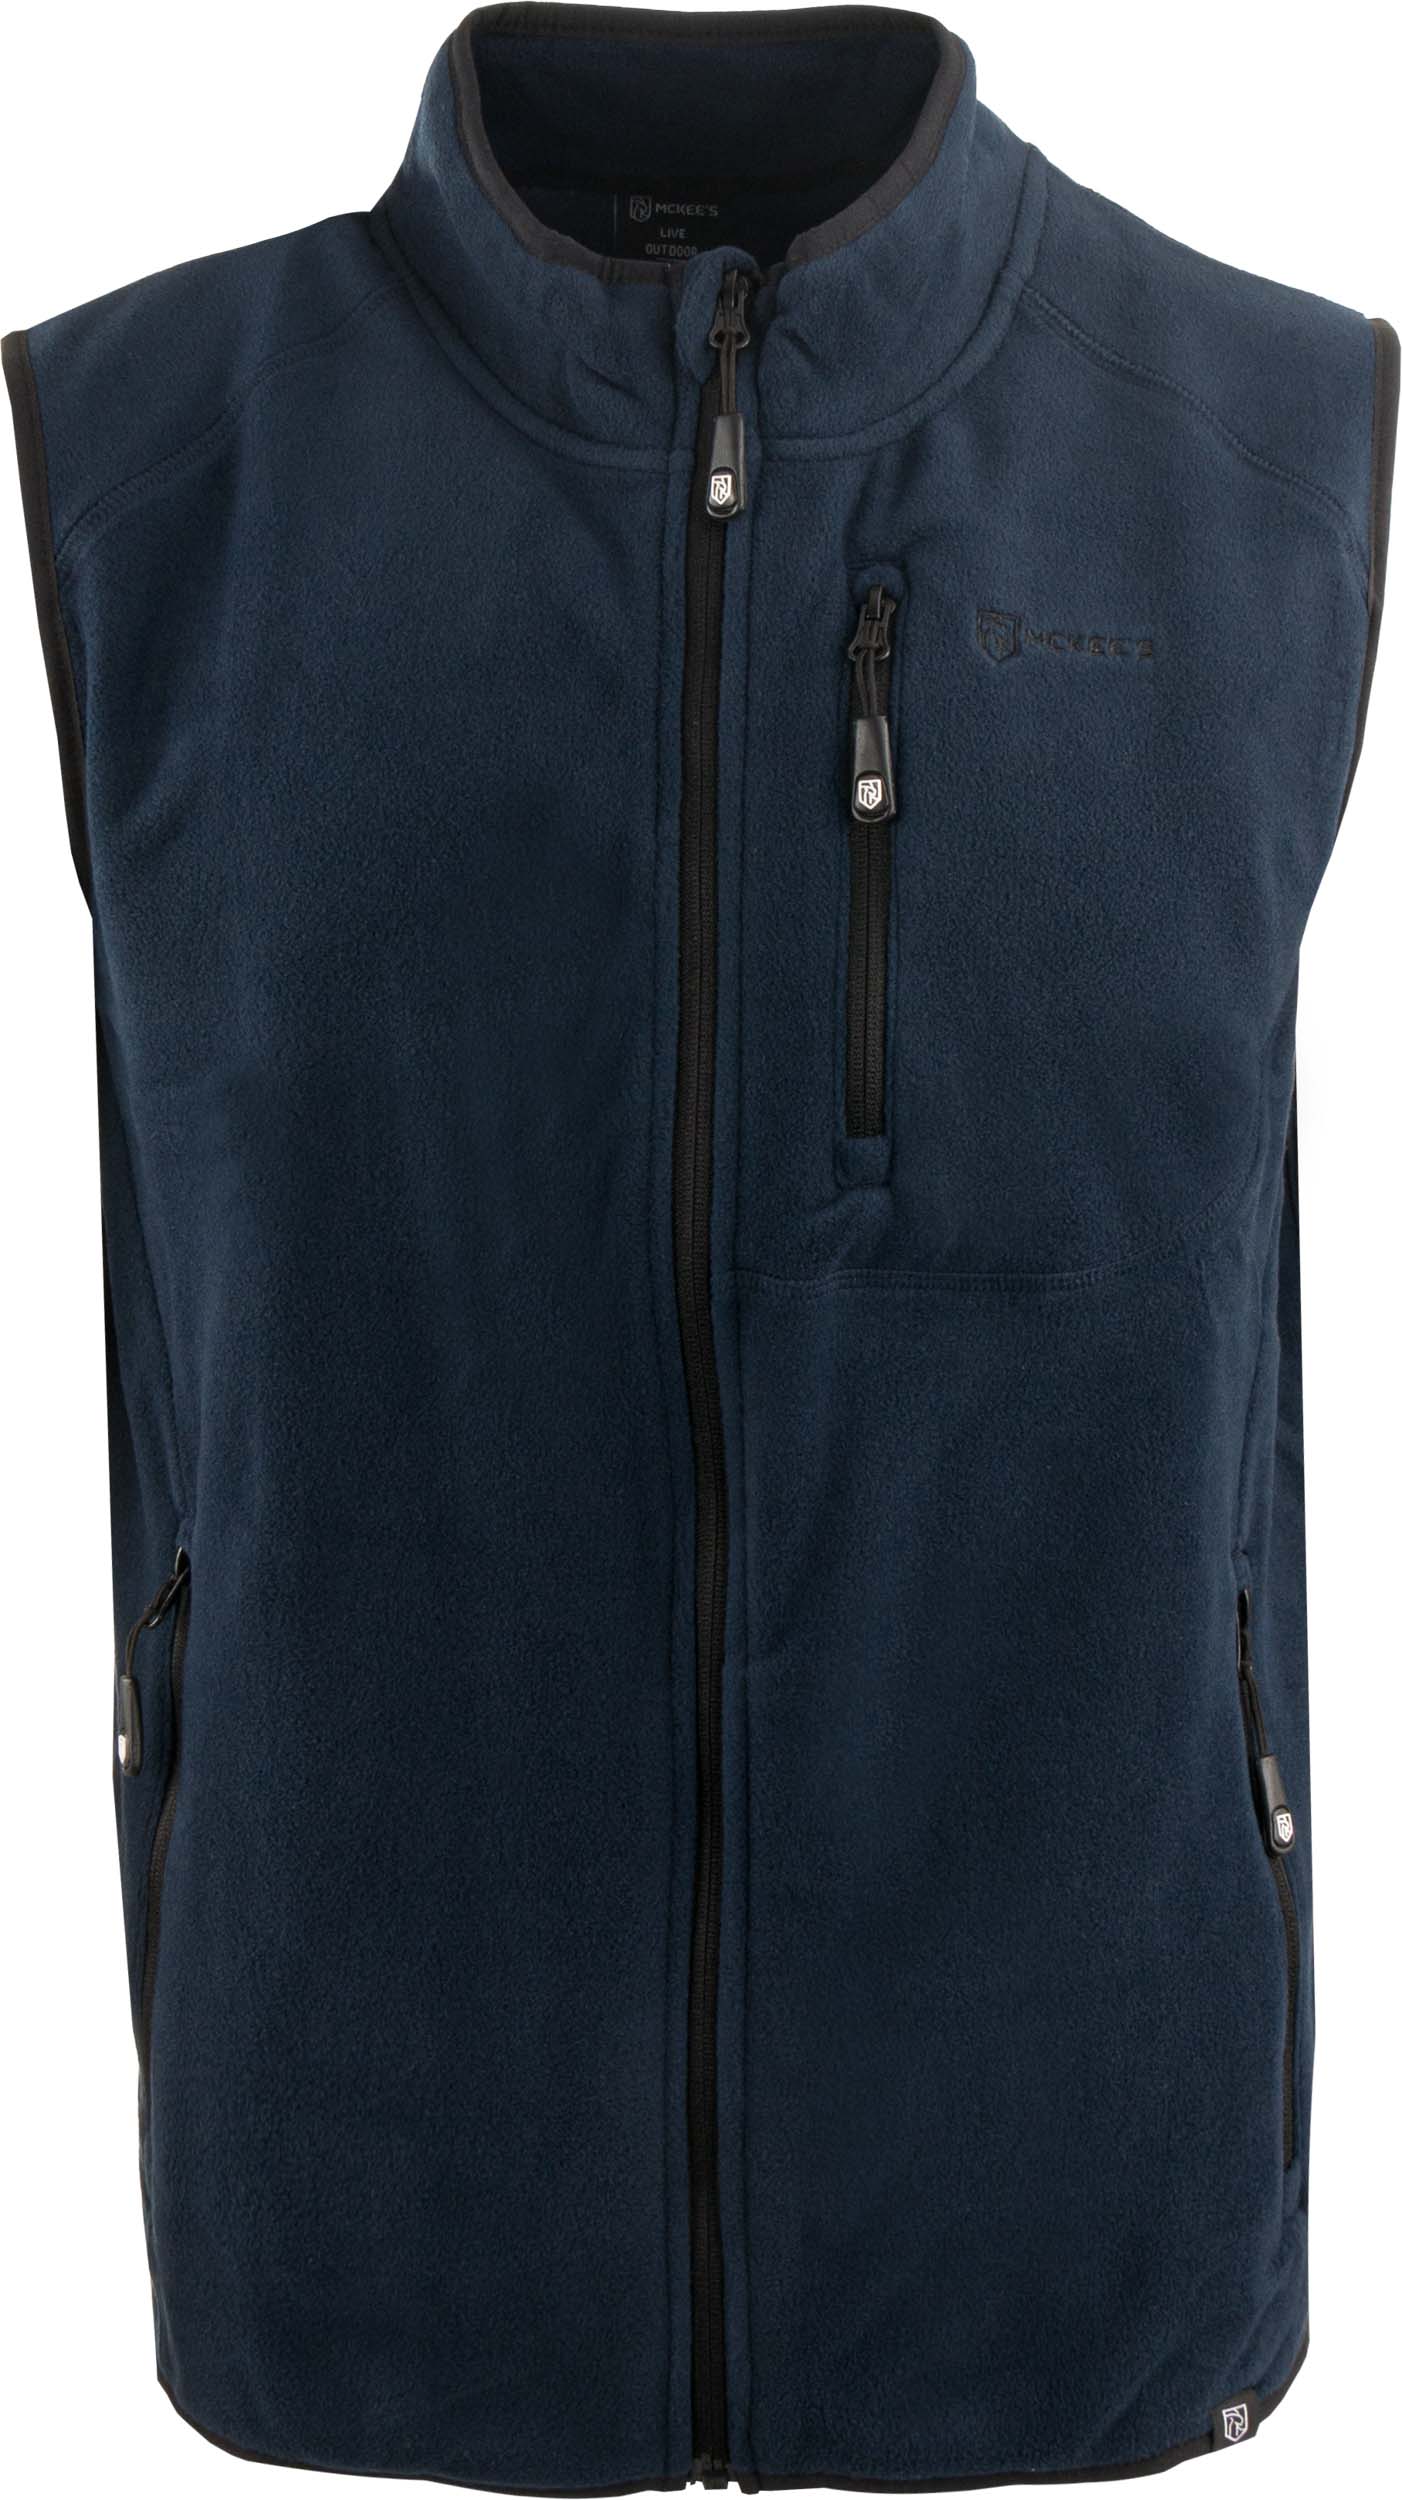 Pánská vesta Mckees Denali Navy Blue|L